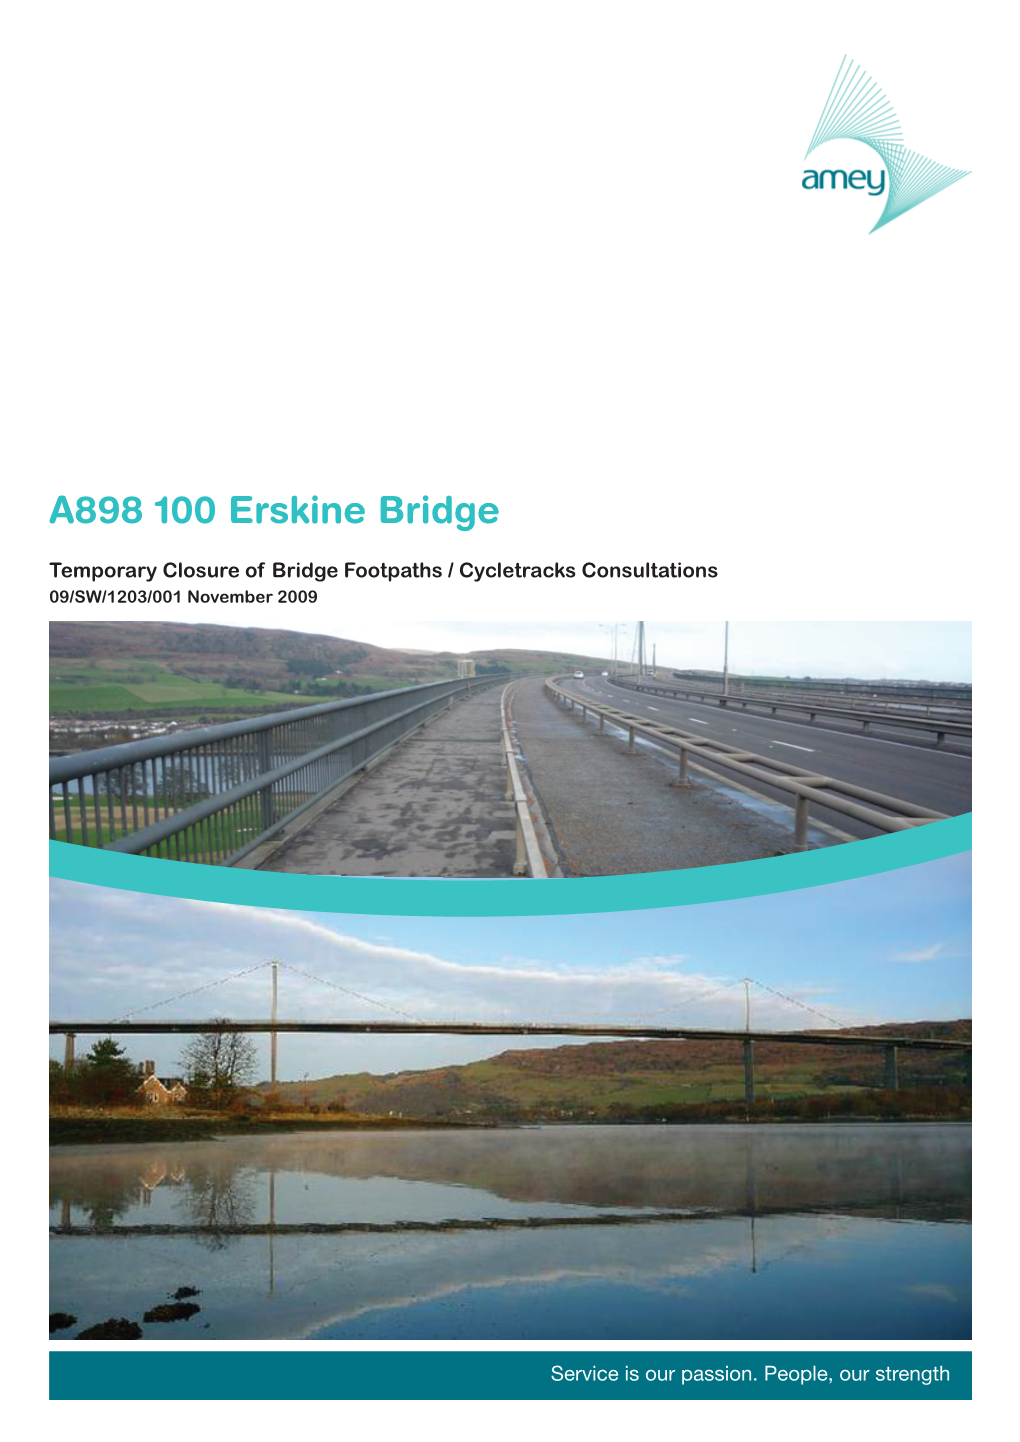 A898 100 Erskine Bridge